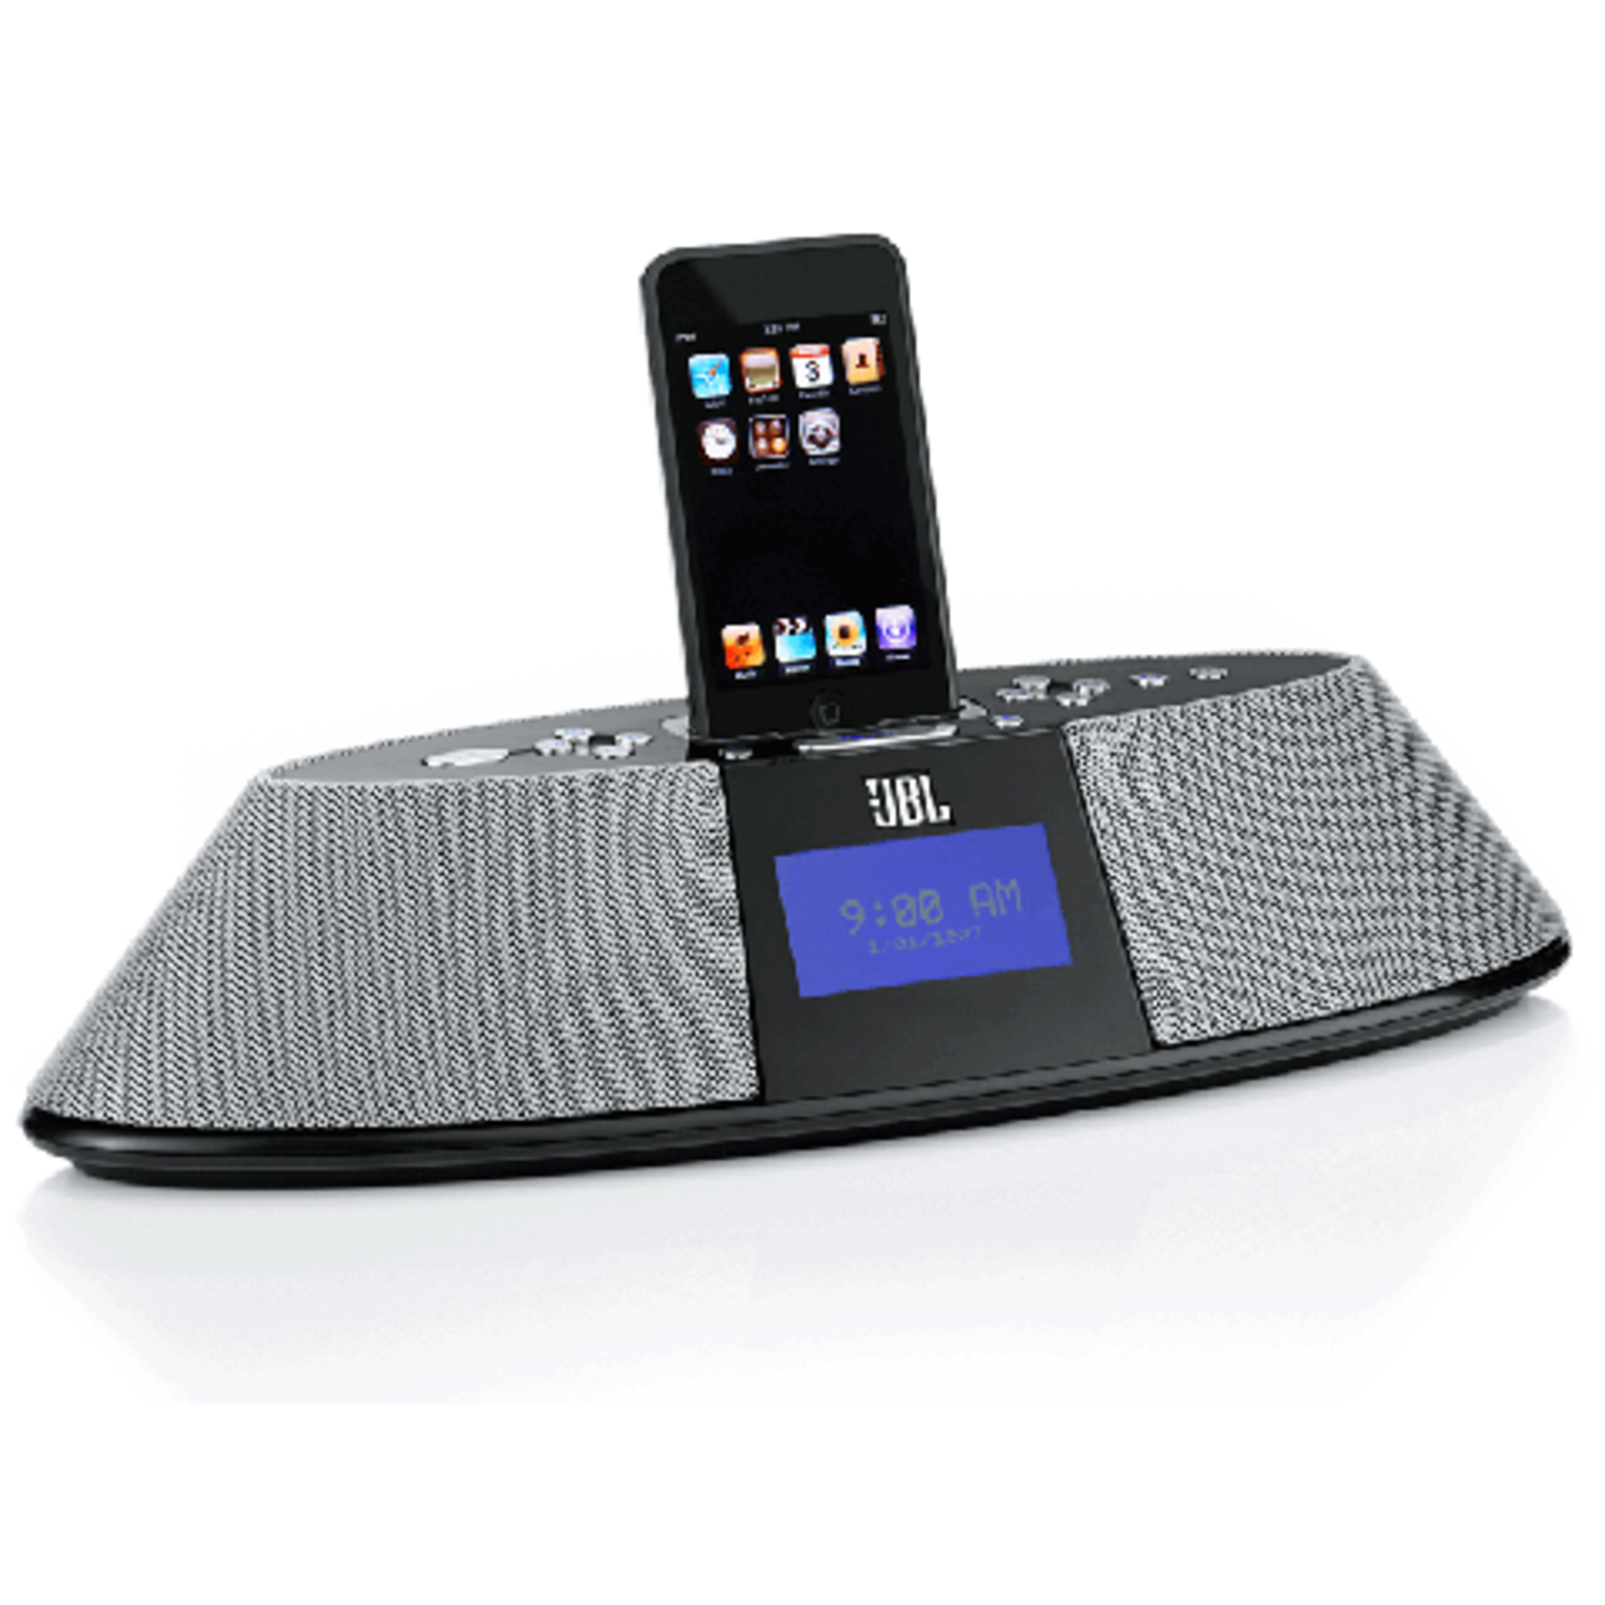 ON TIME 400IHD - Black - High Performance Loudspeaker Dock for iPod with HD Radio - Hero